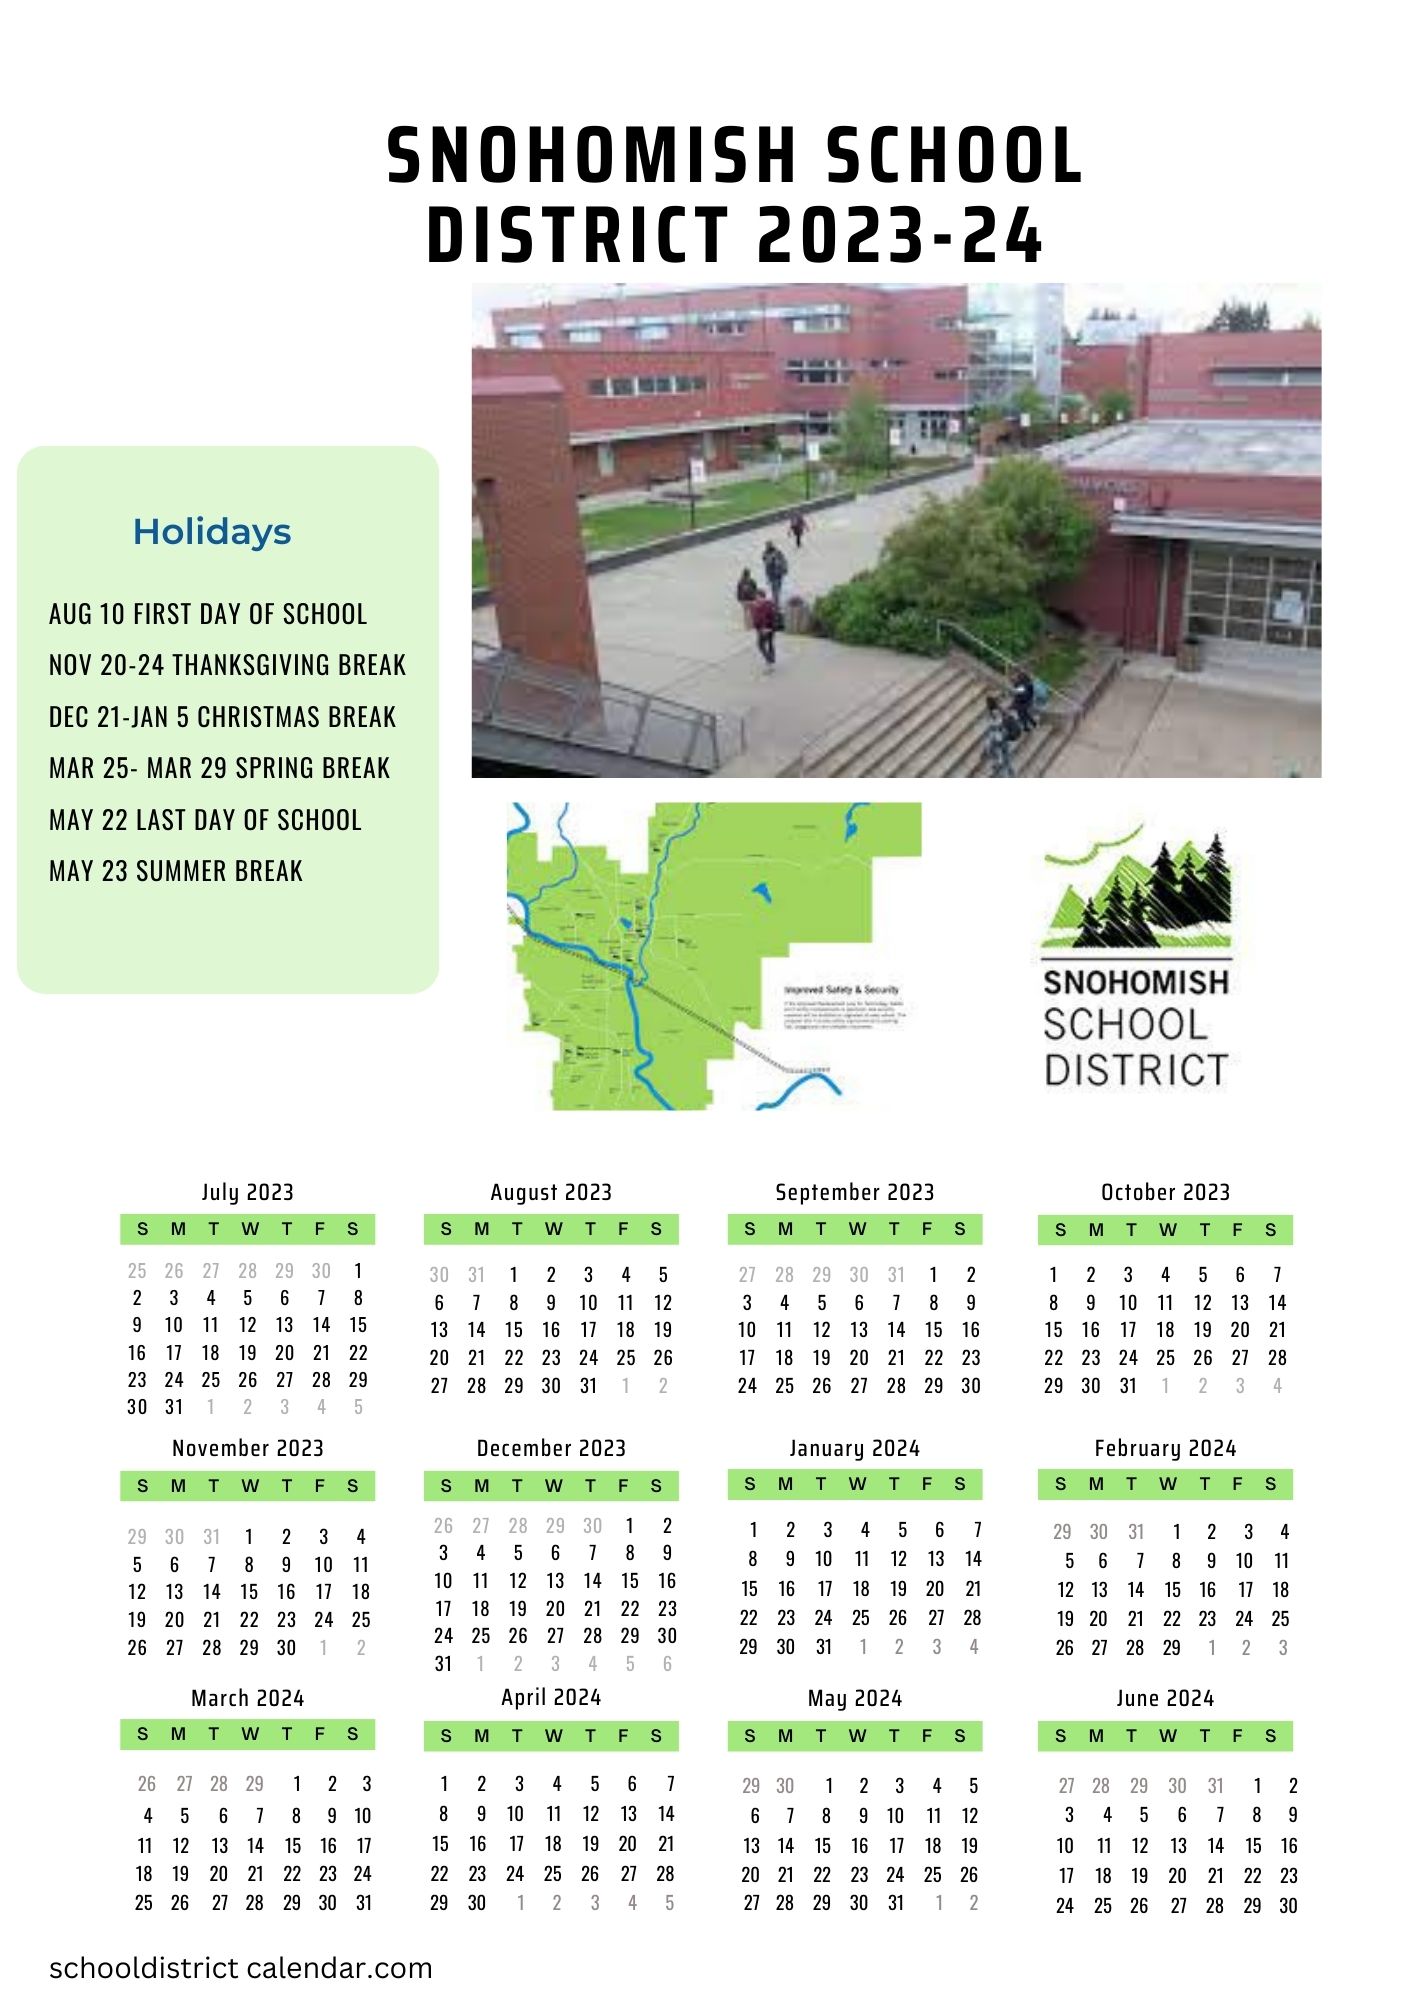 snohomish-school-district-calendar-holidays-2023-2024